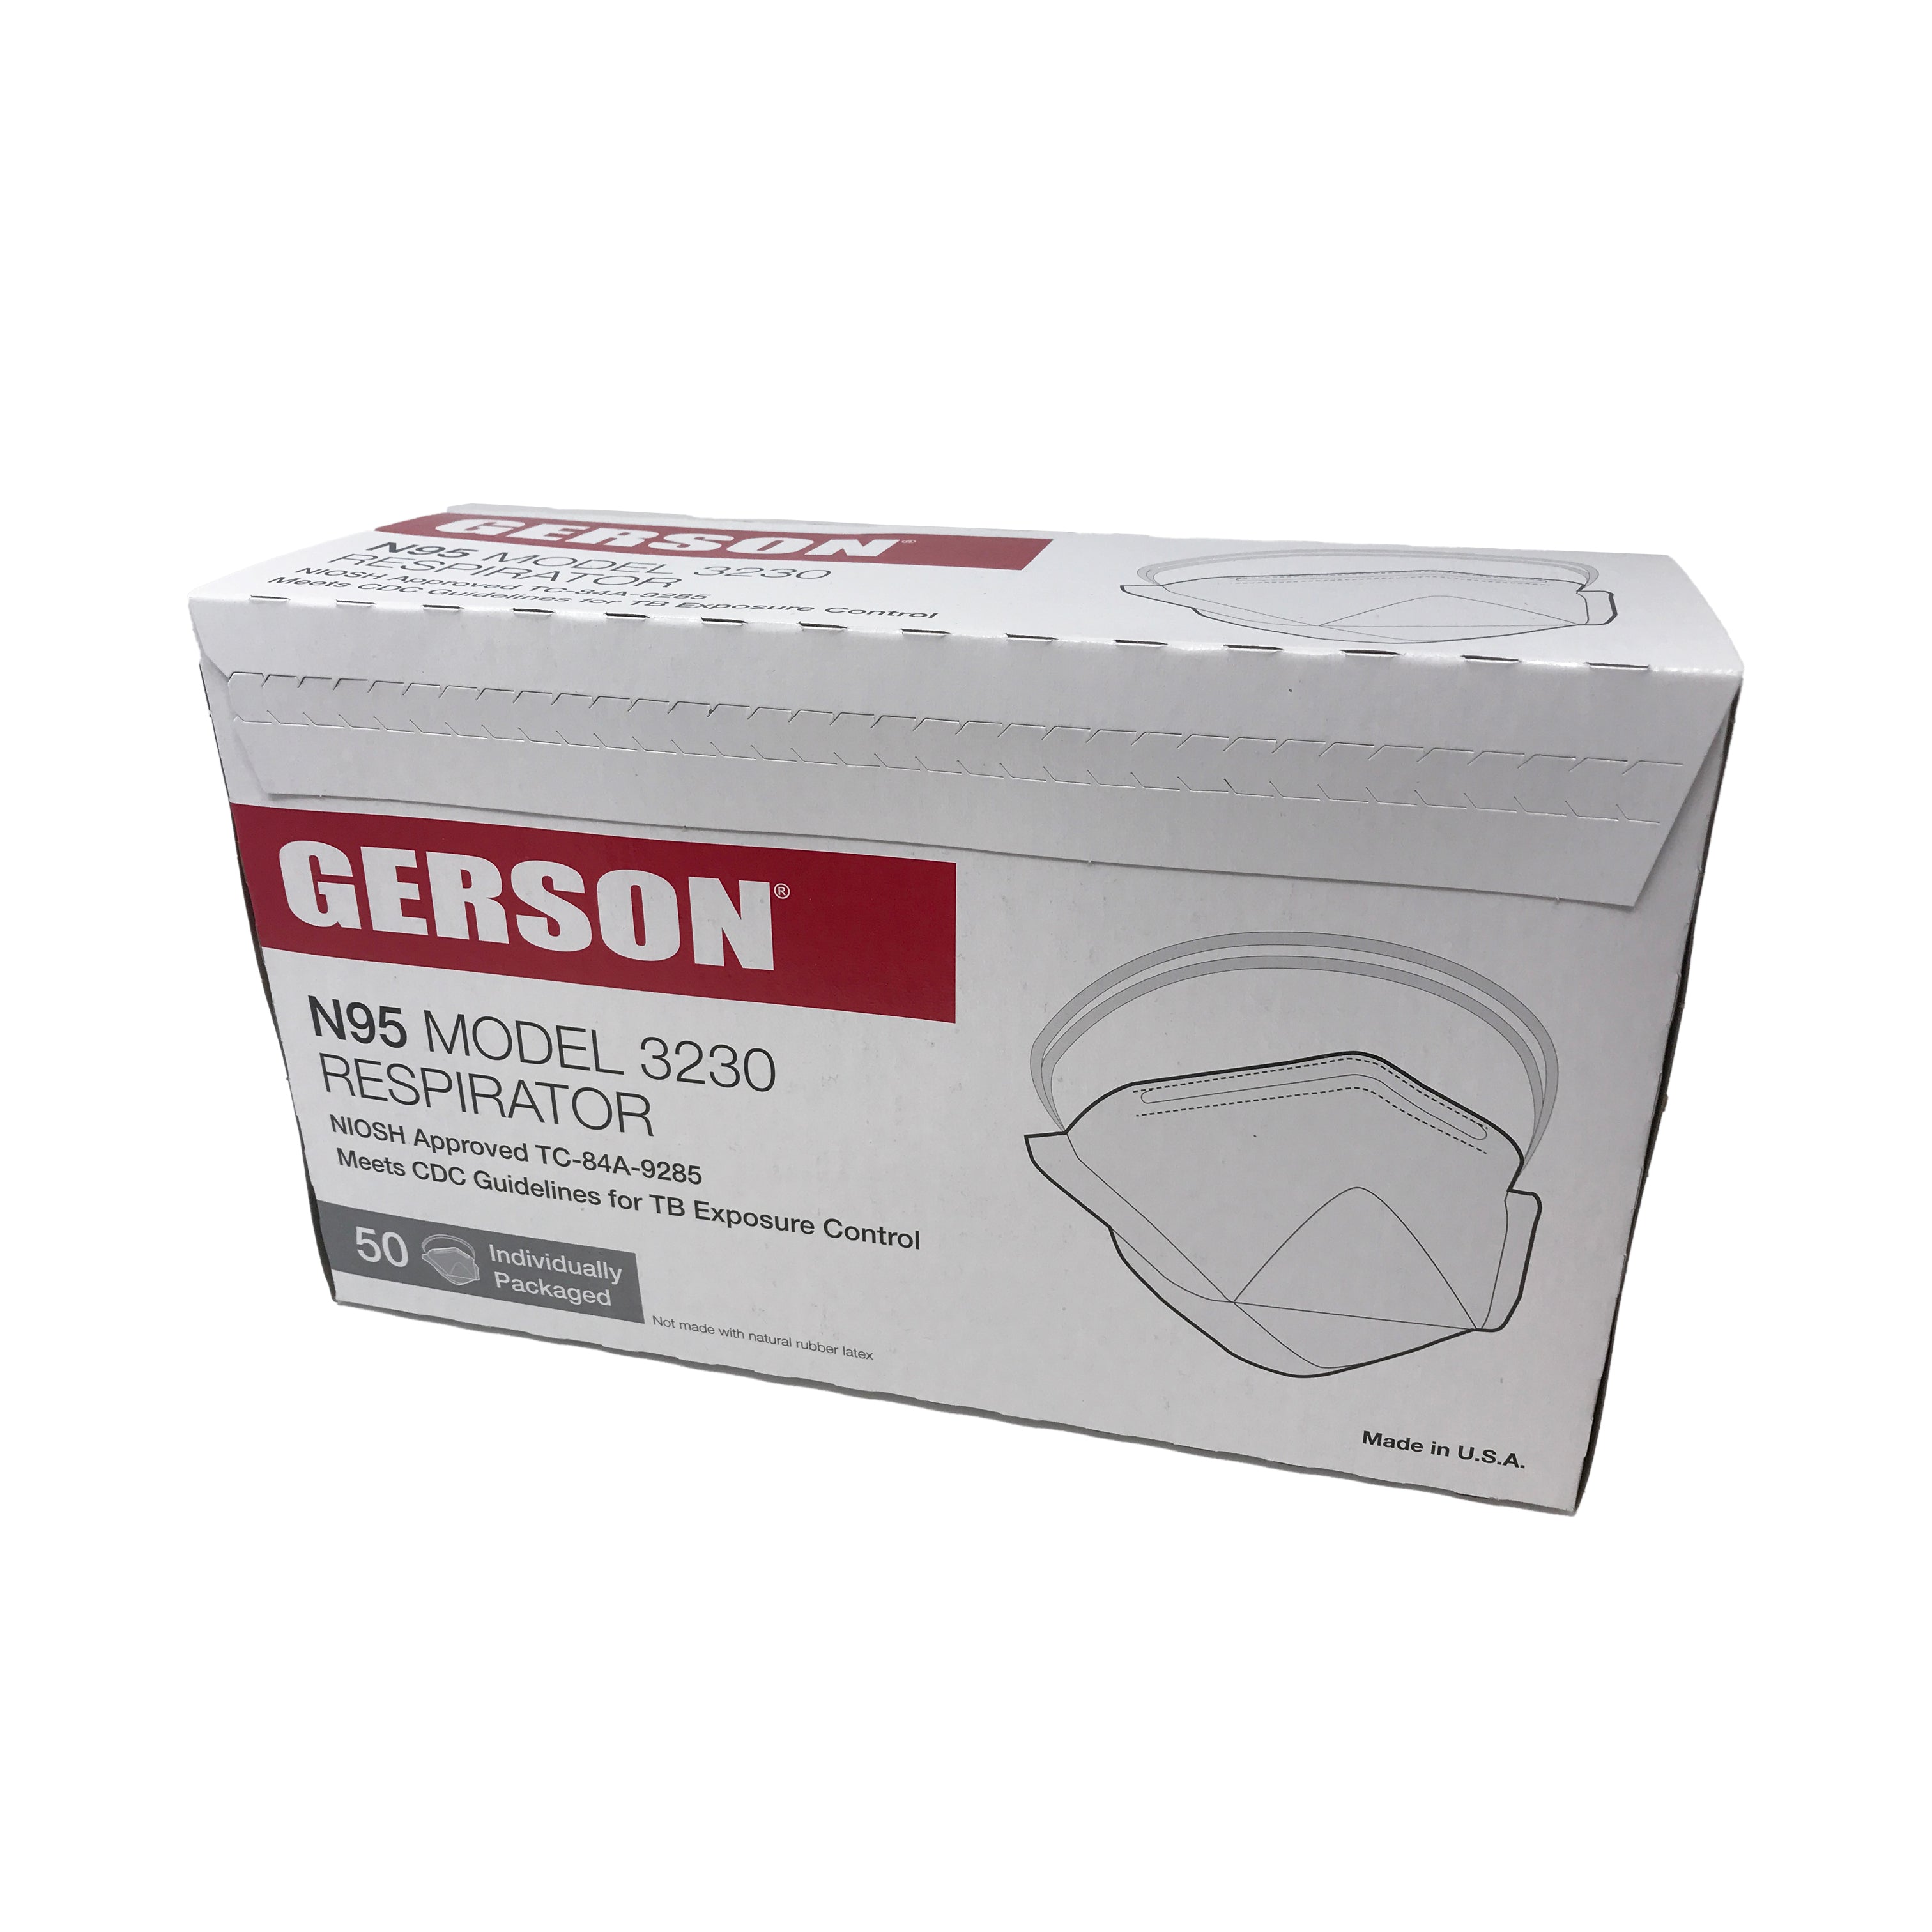 Gerson Model 3230 N95 Respirator